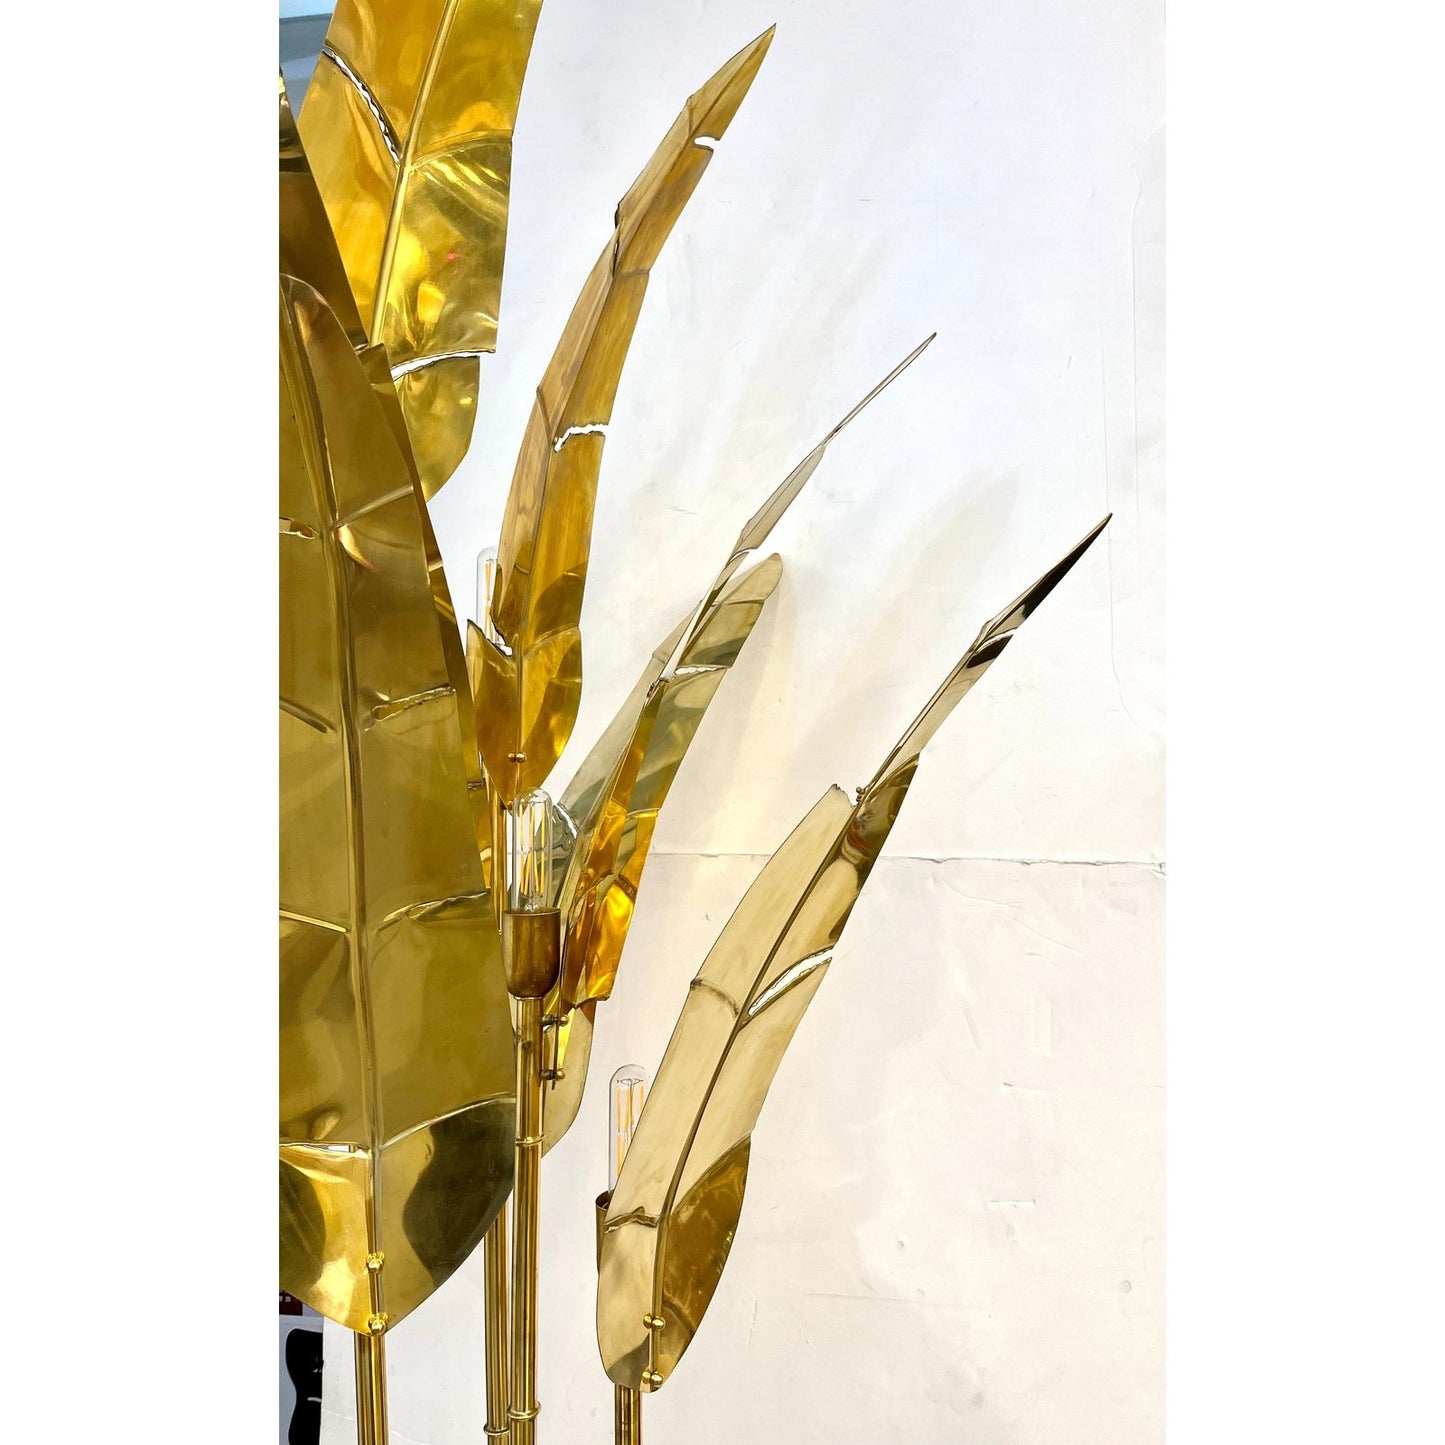 Contemporary Italian Art Deco Design Palm Tree Pair of 7-Leaf Brass Floor Lamps